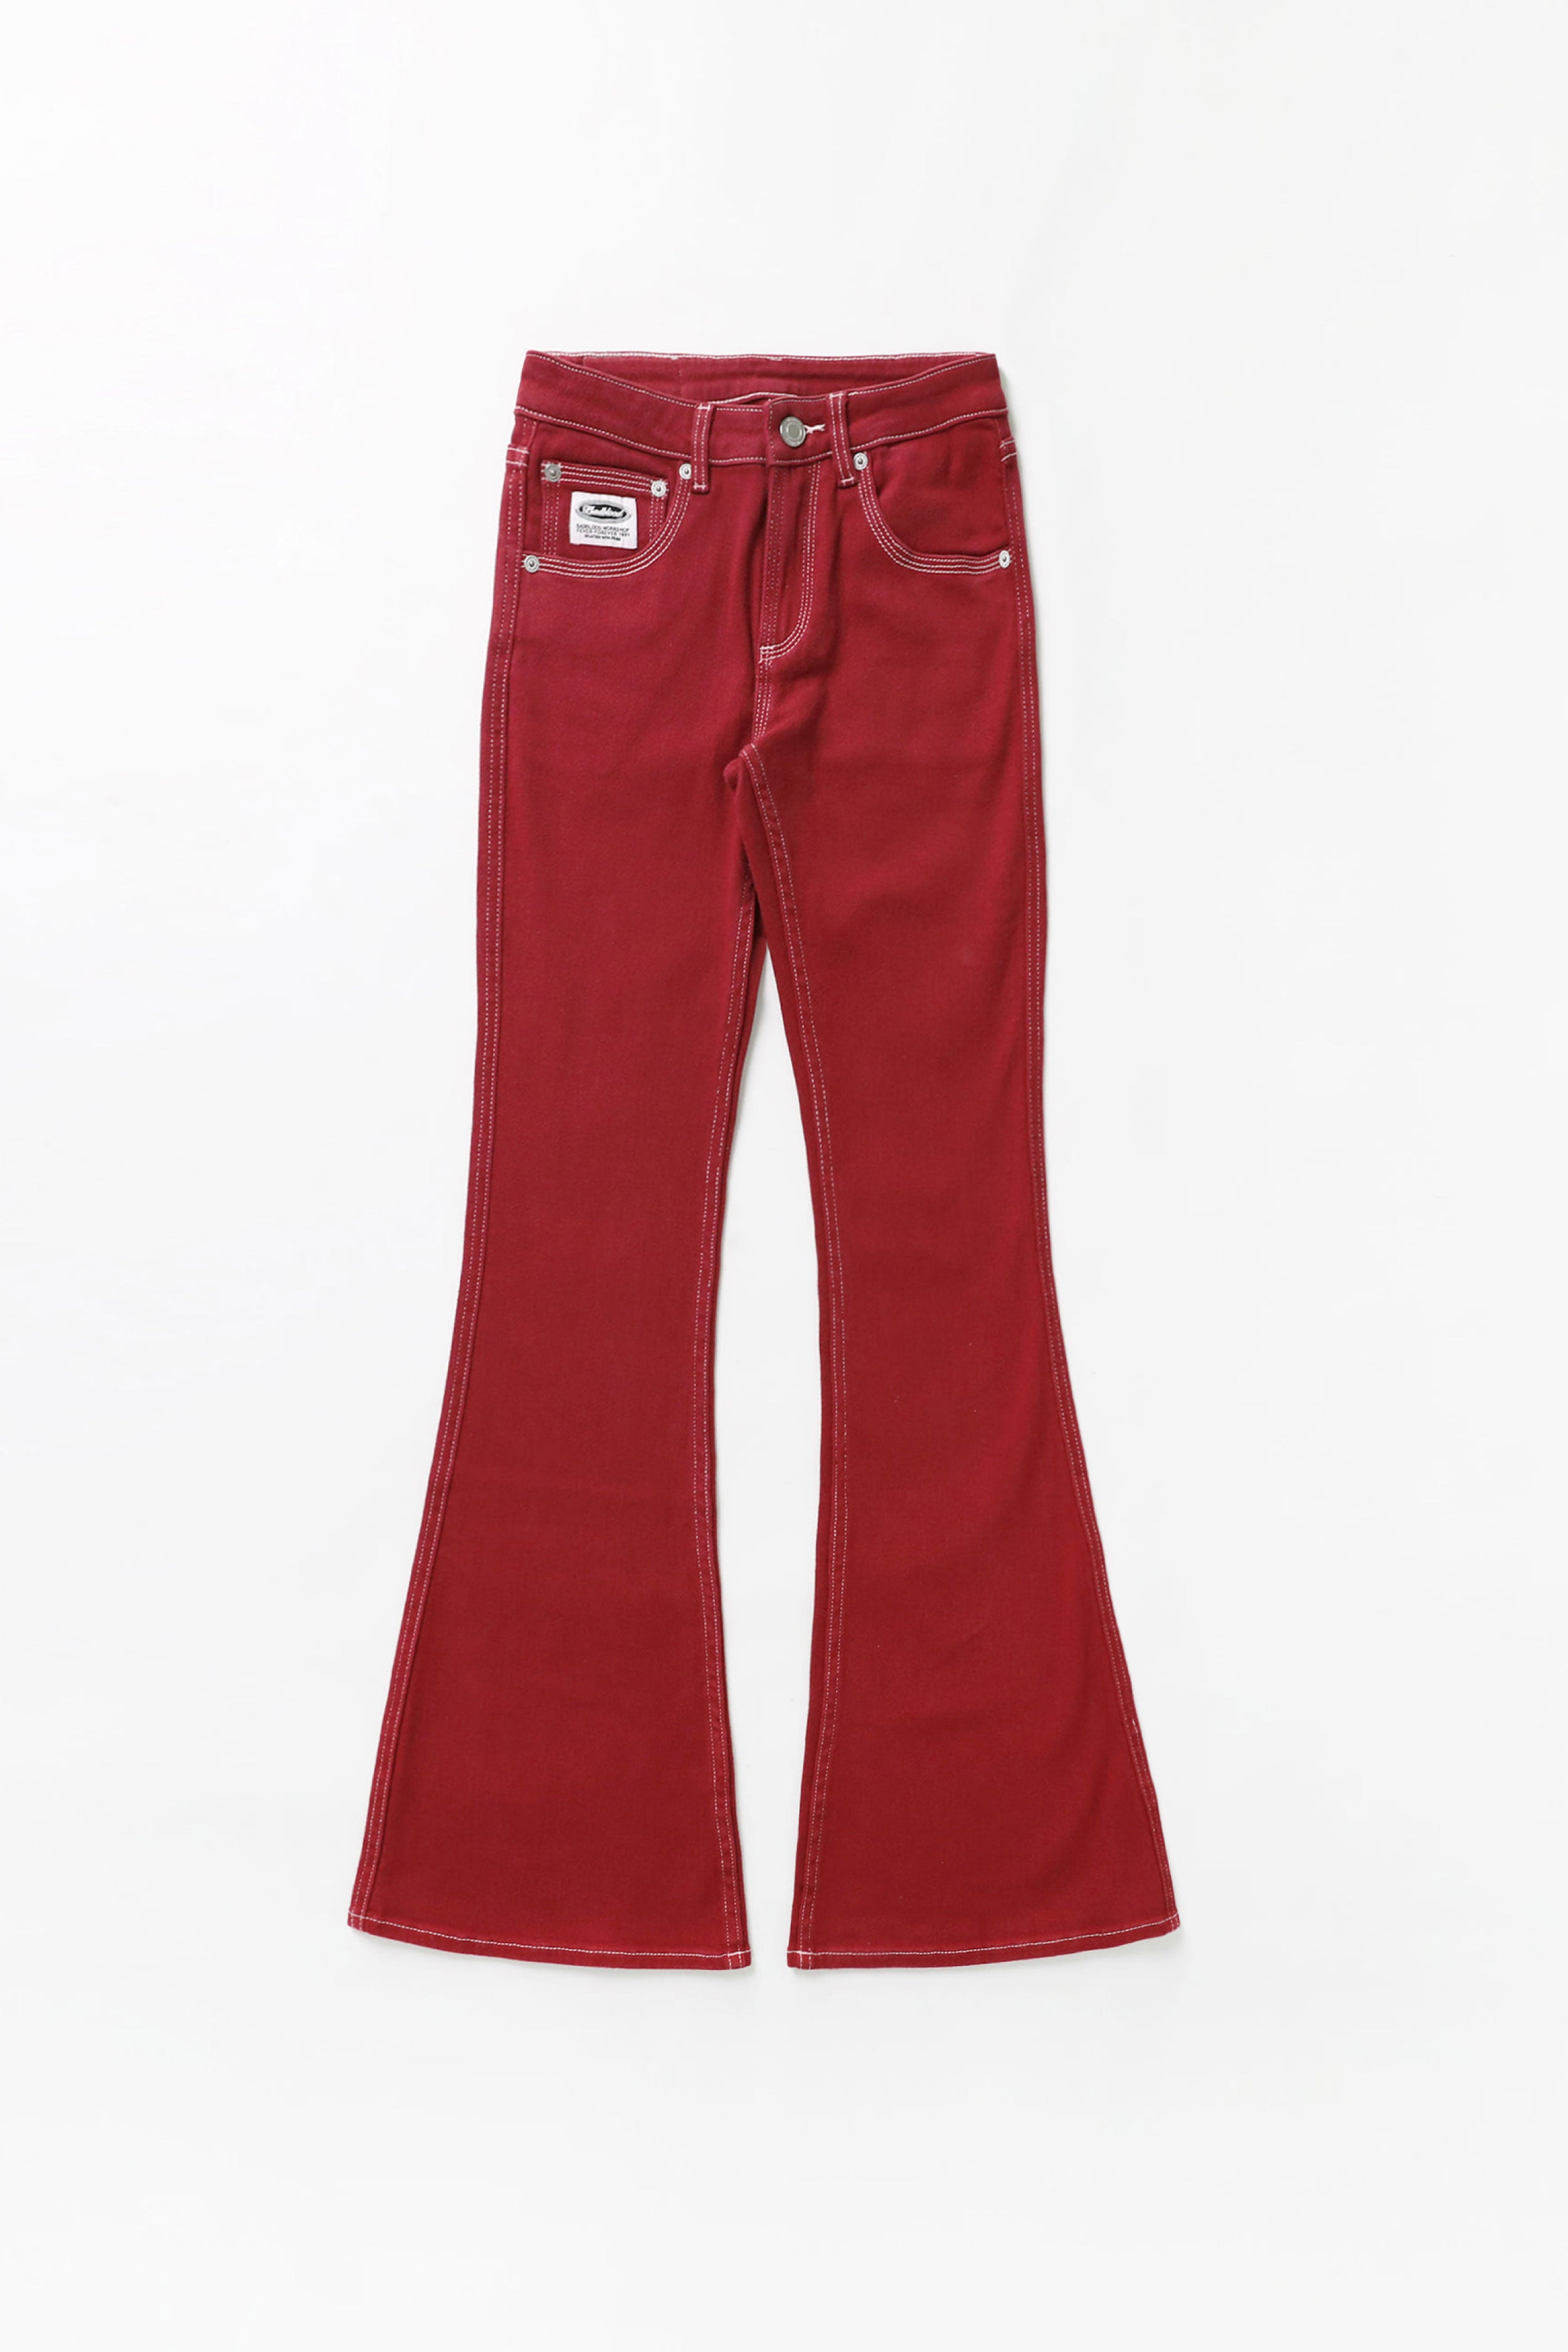 Badblood Workshop Low Rise Pantalon Color Jeans Burgundy